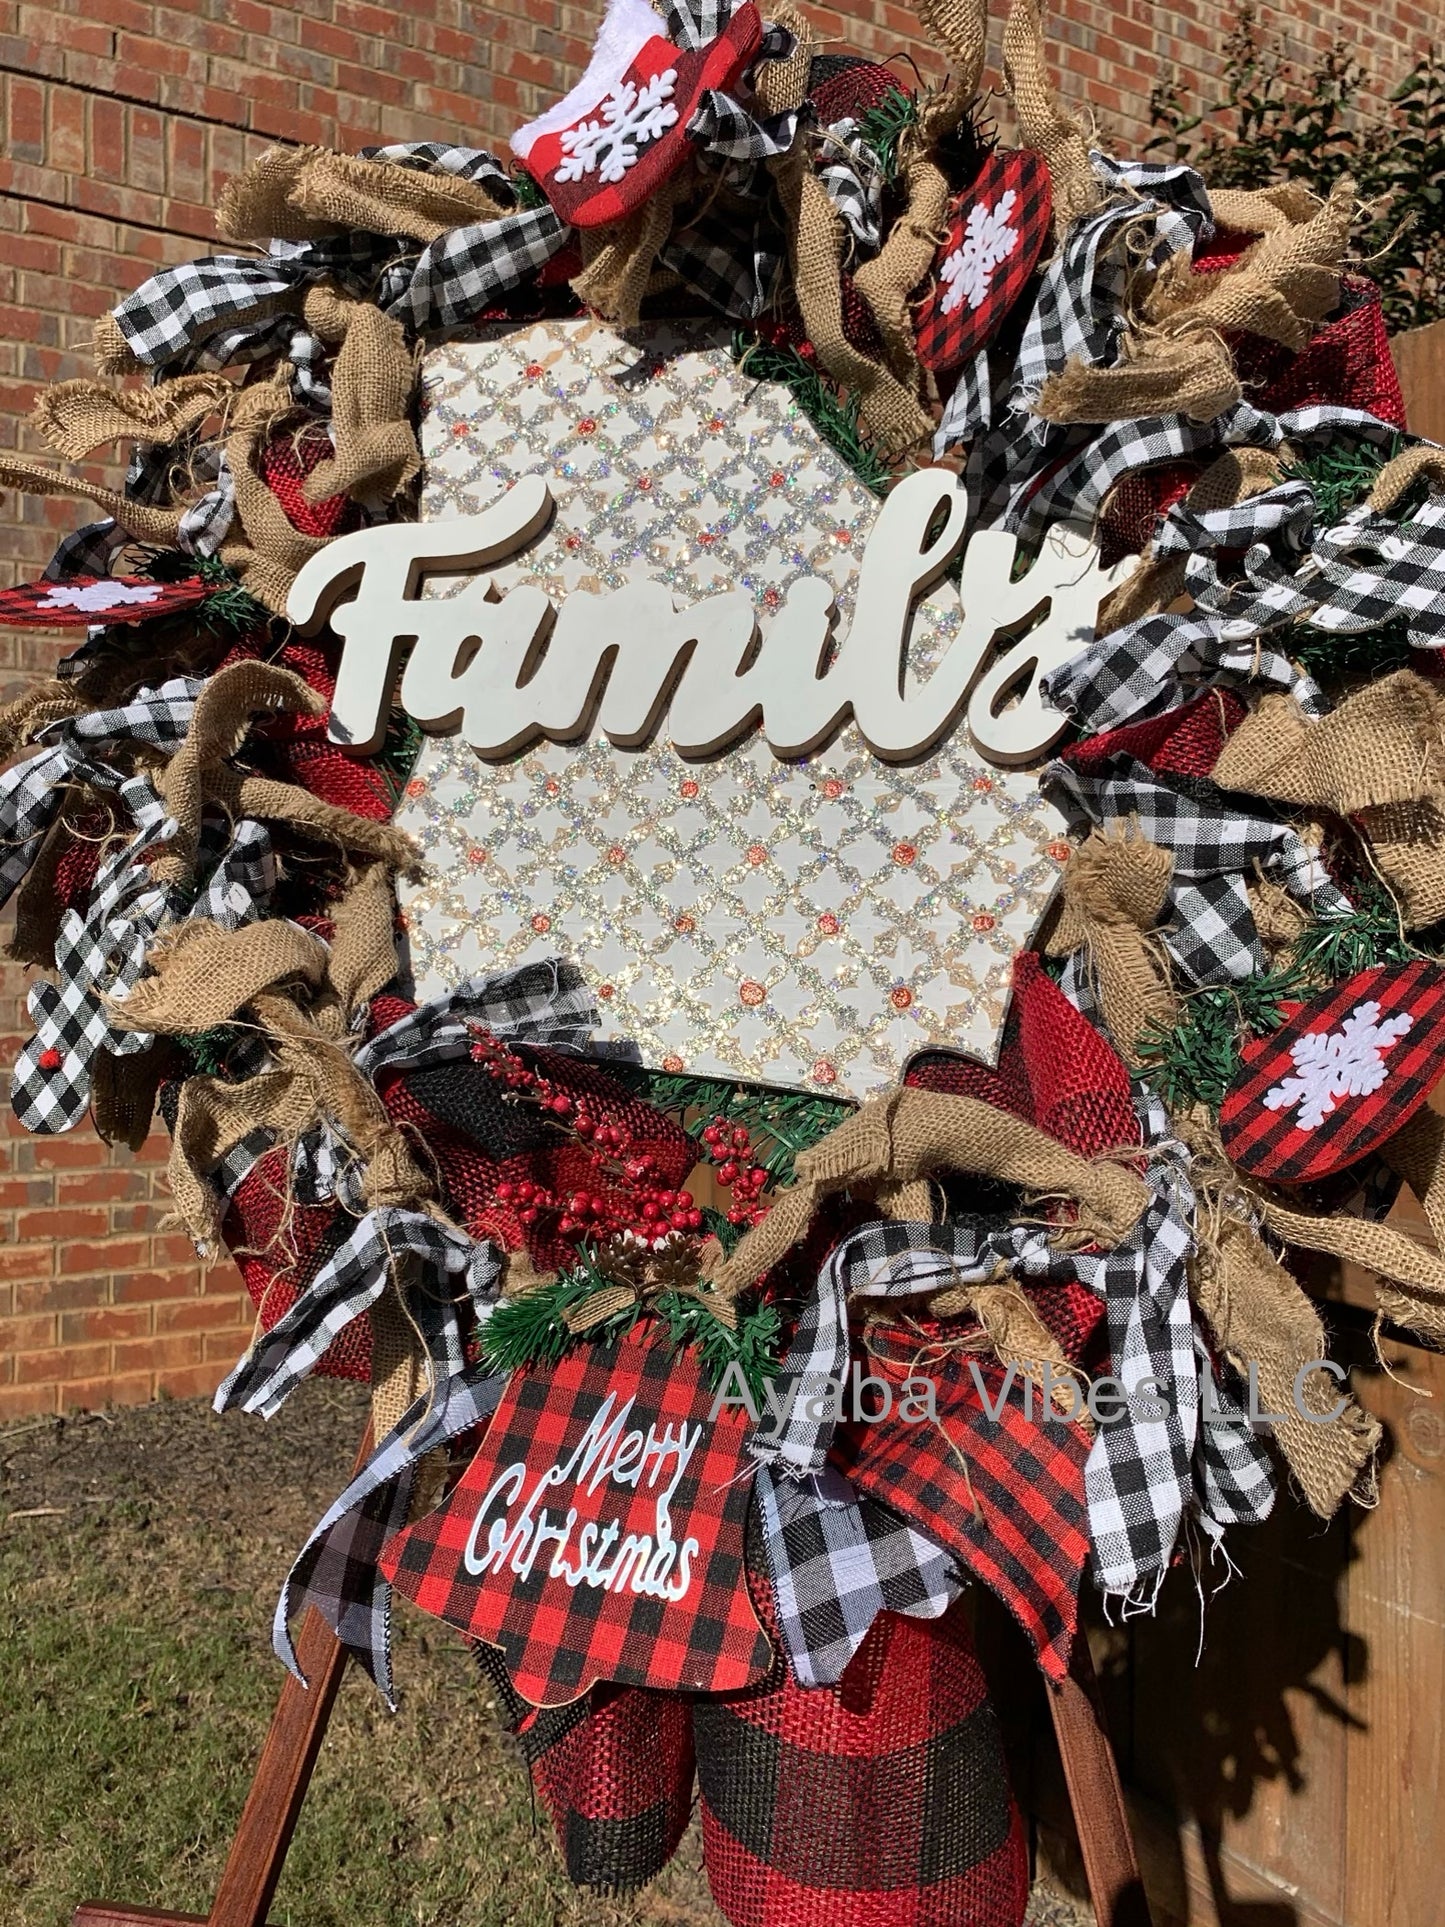 It’s a Georgia Christmas with Family Wreath 24”